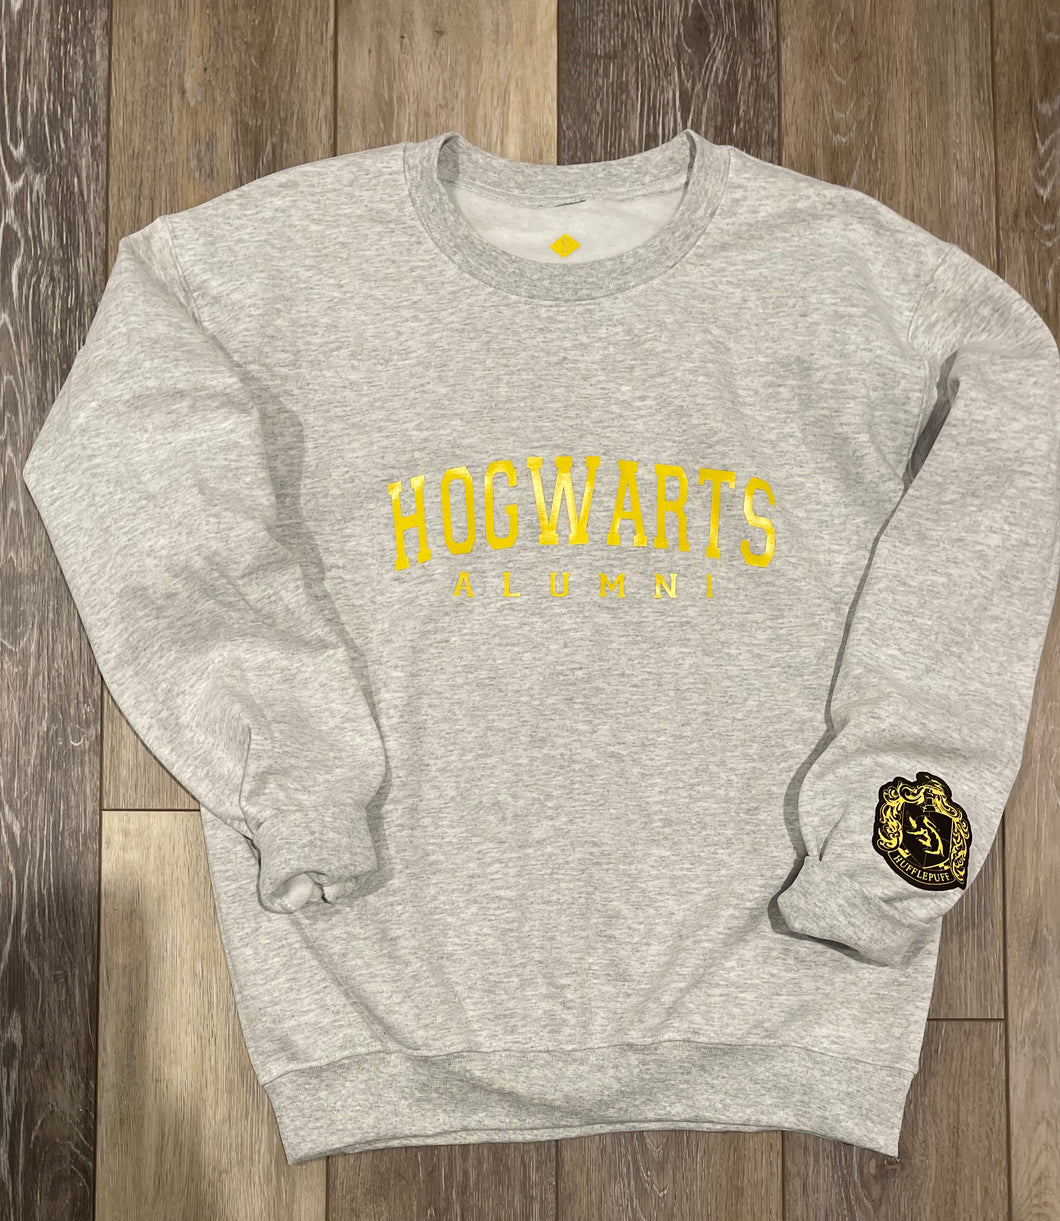 Hogwarts Alumni Sweatshirt with Hufflepuff Crest on Sleeve